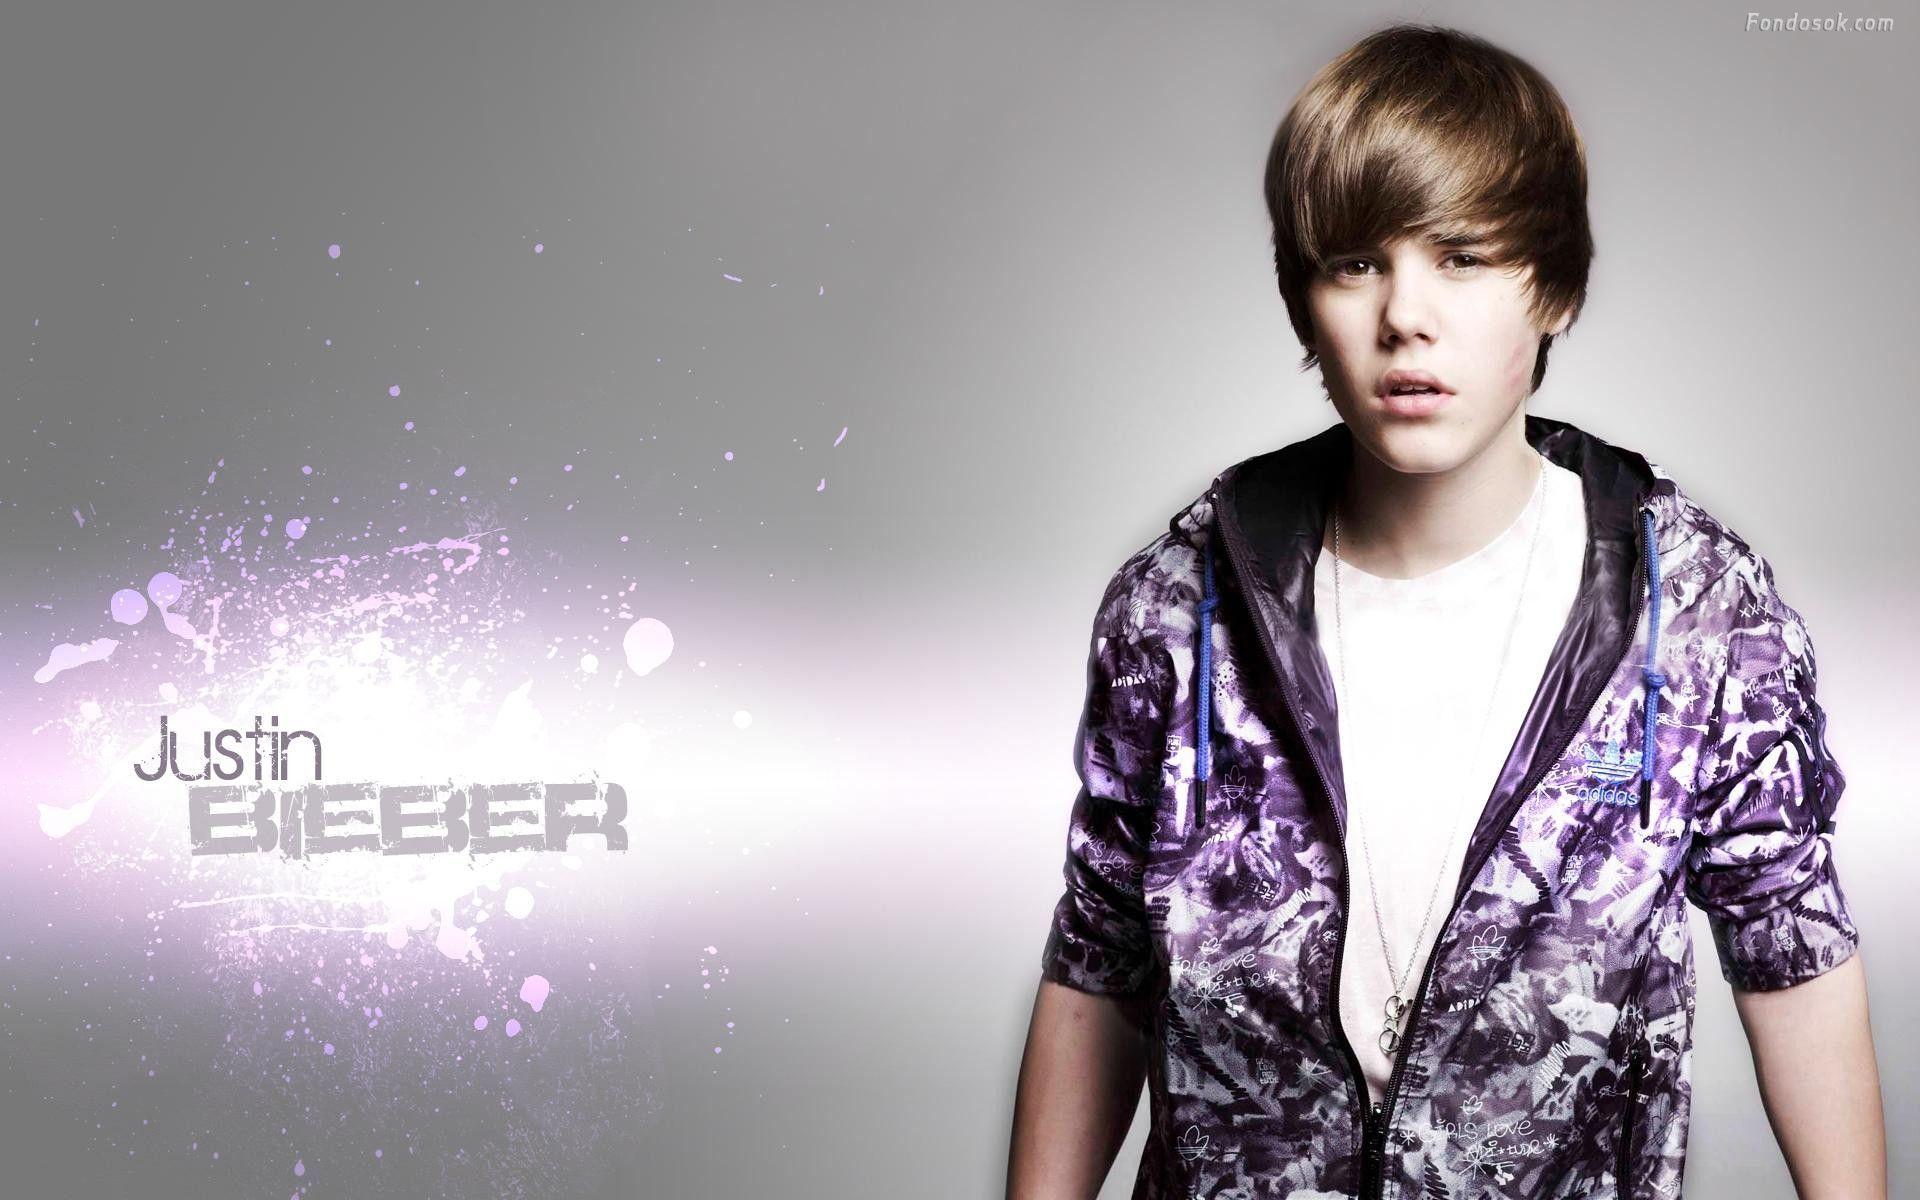 New Justin Bieber Wallpaper 13 18016 Image HD Wallpaper. Wallfoy.com